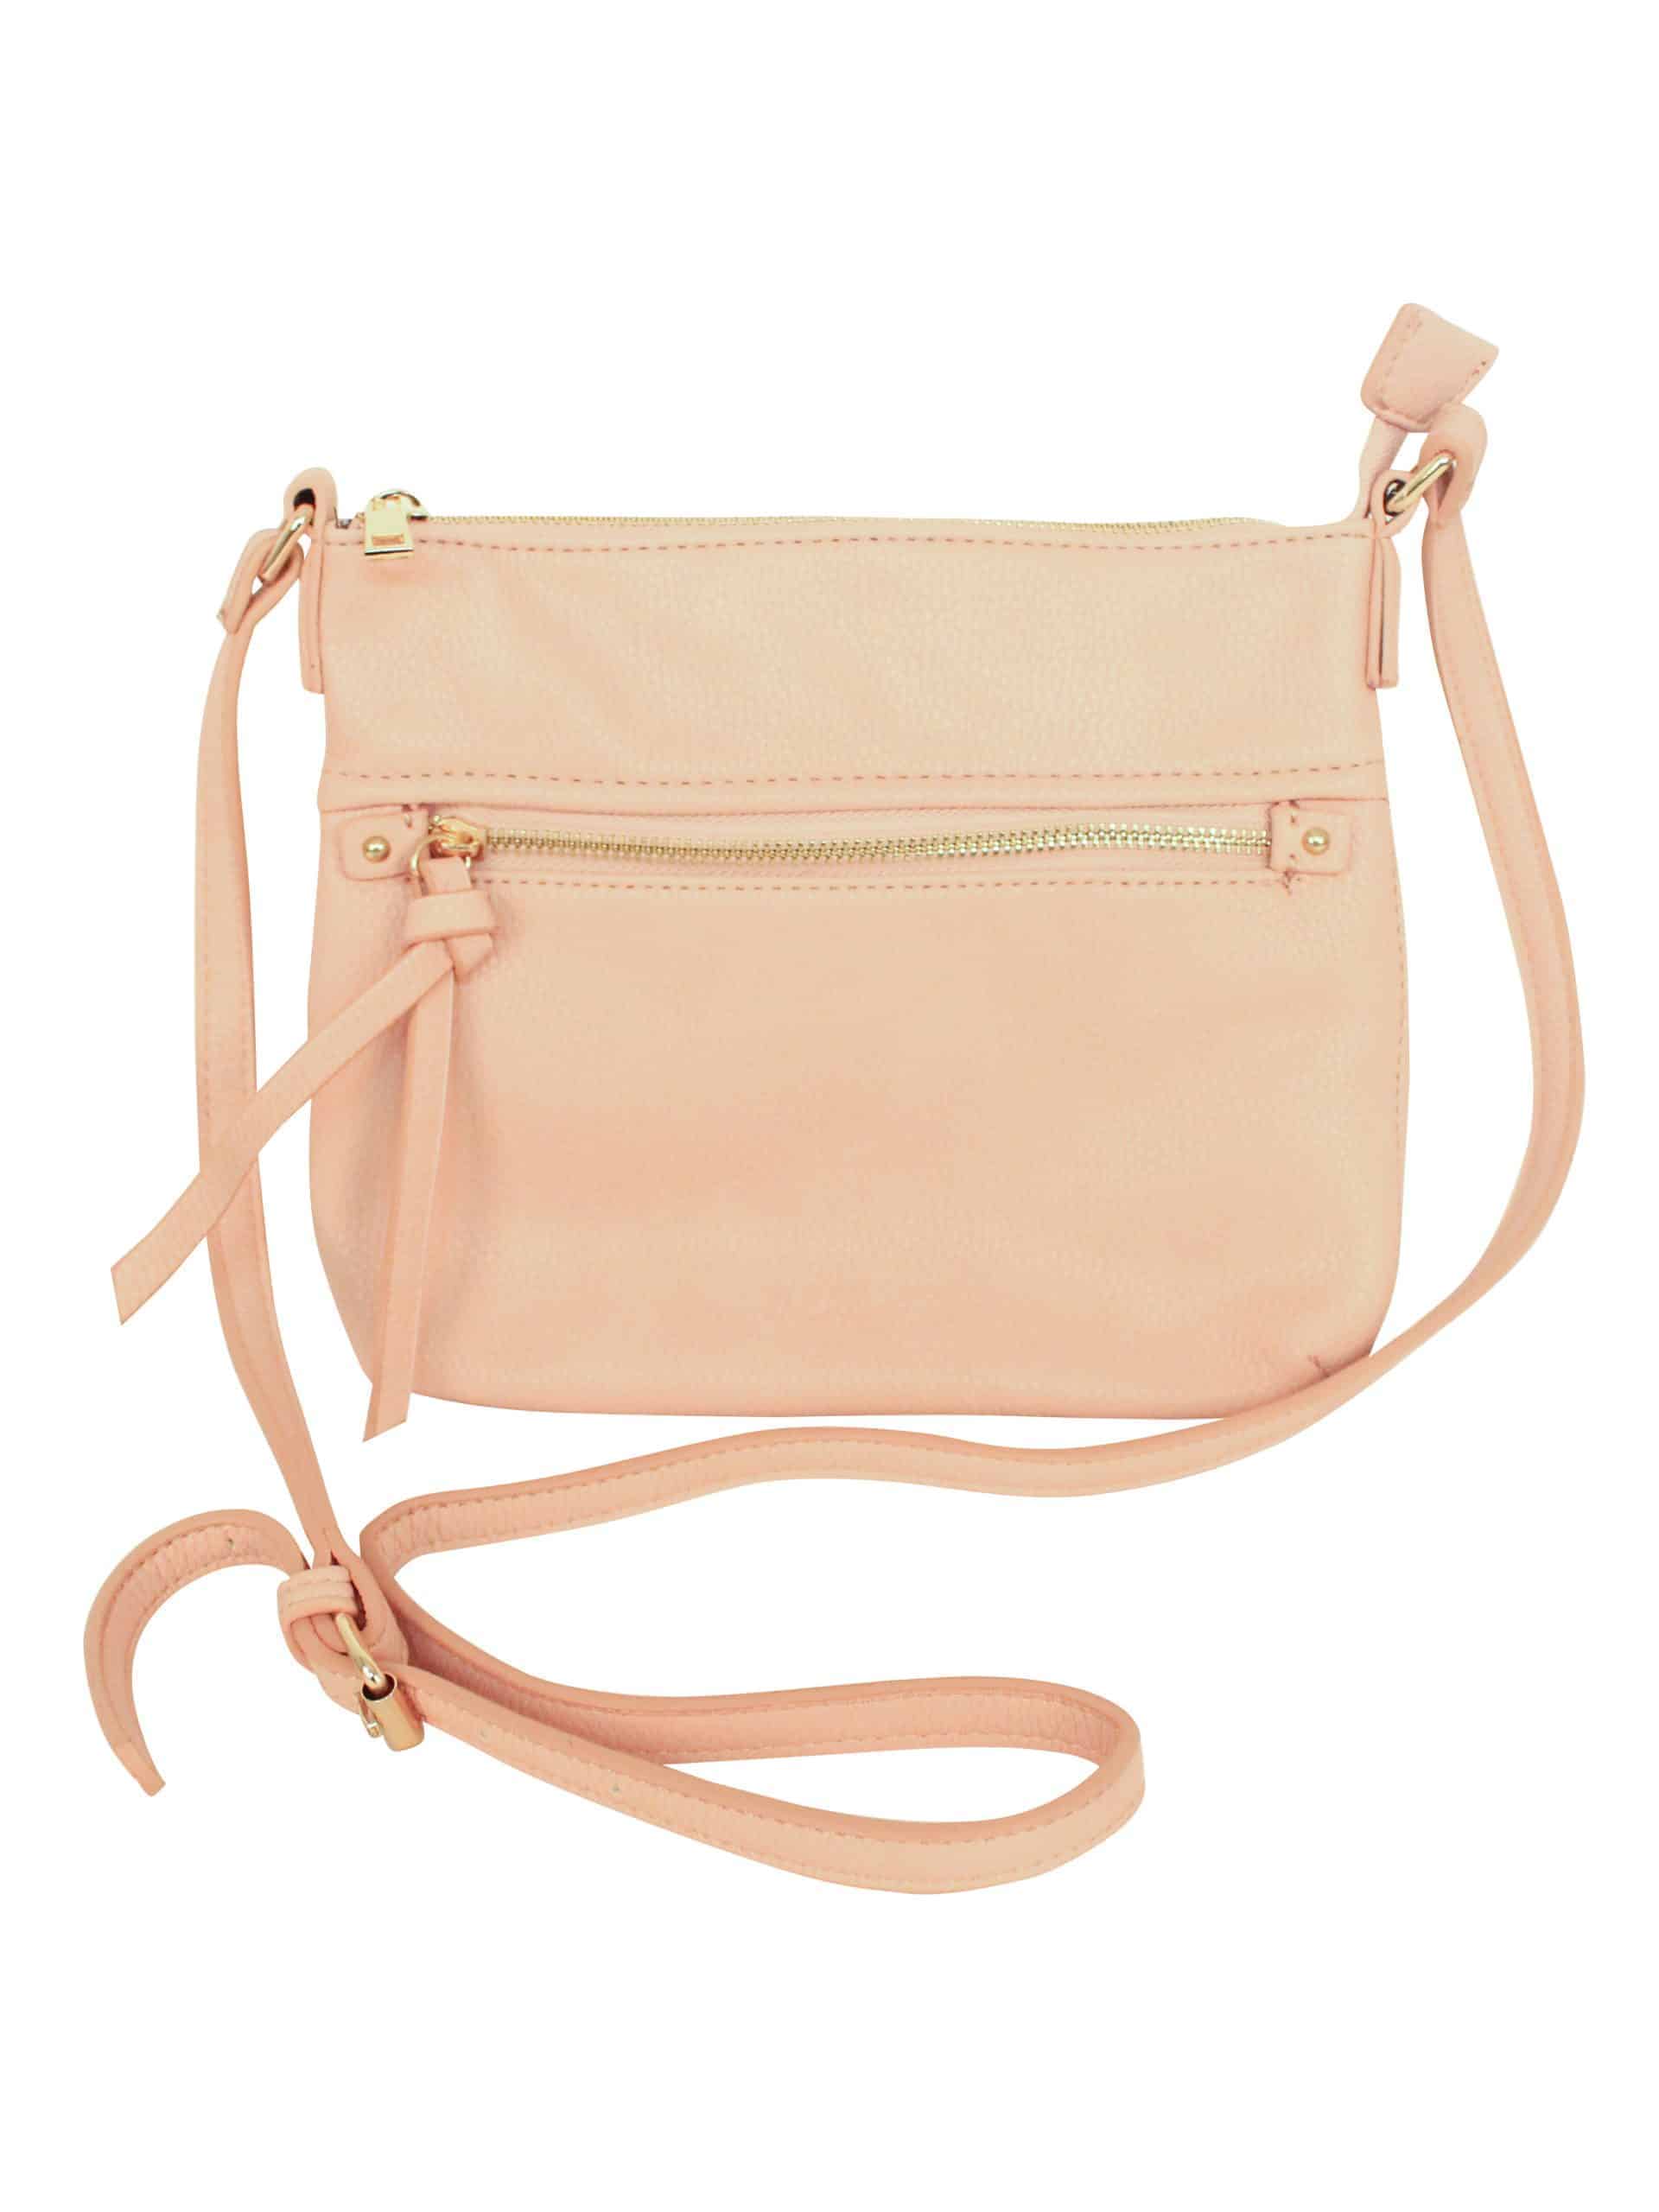 Solid Pink Vegan Leather Crossbody Bag, Adjustable Strap Small Crossbody  Purse, Clutch Bag, Phone Bag, Minimalist Pastel Rose Crossbody Bag - Etsy